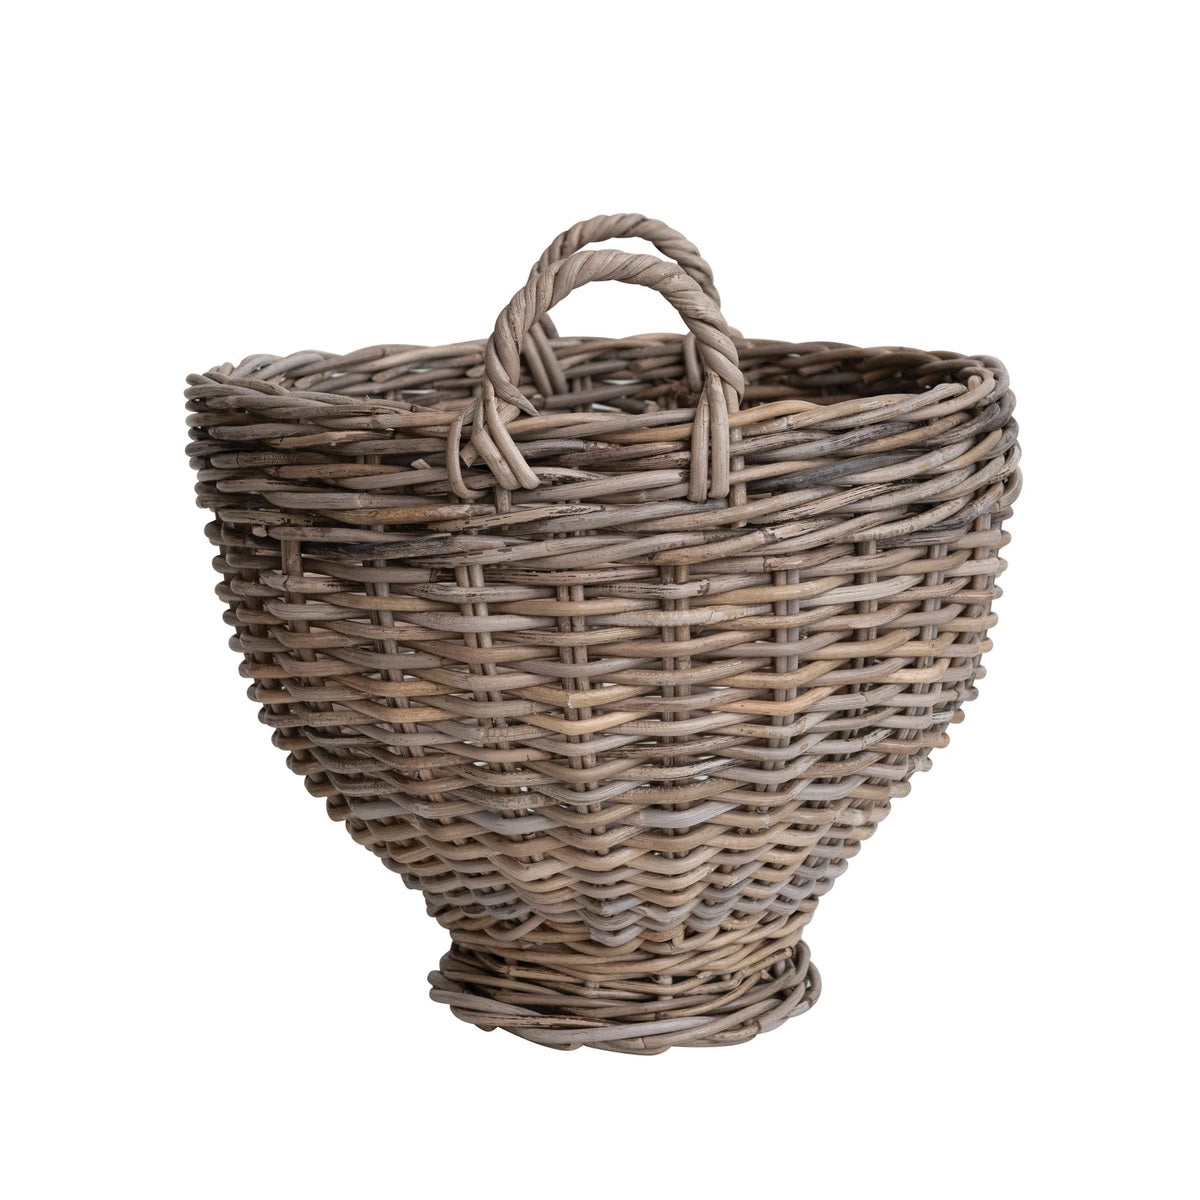 Zara Footed Basket